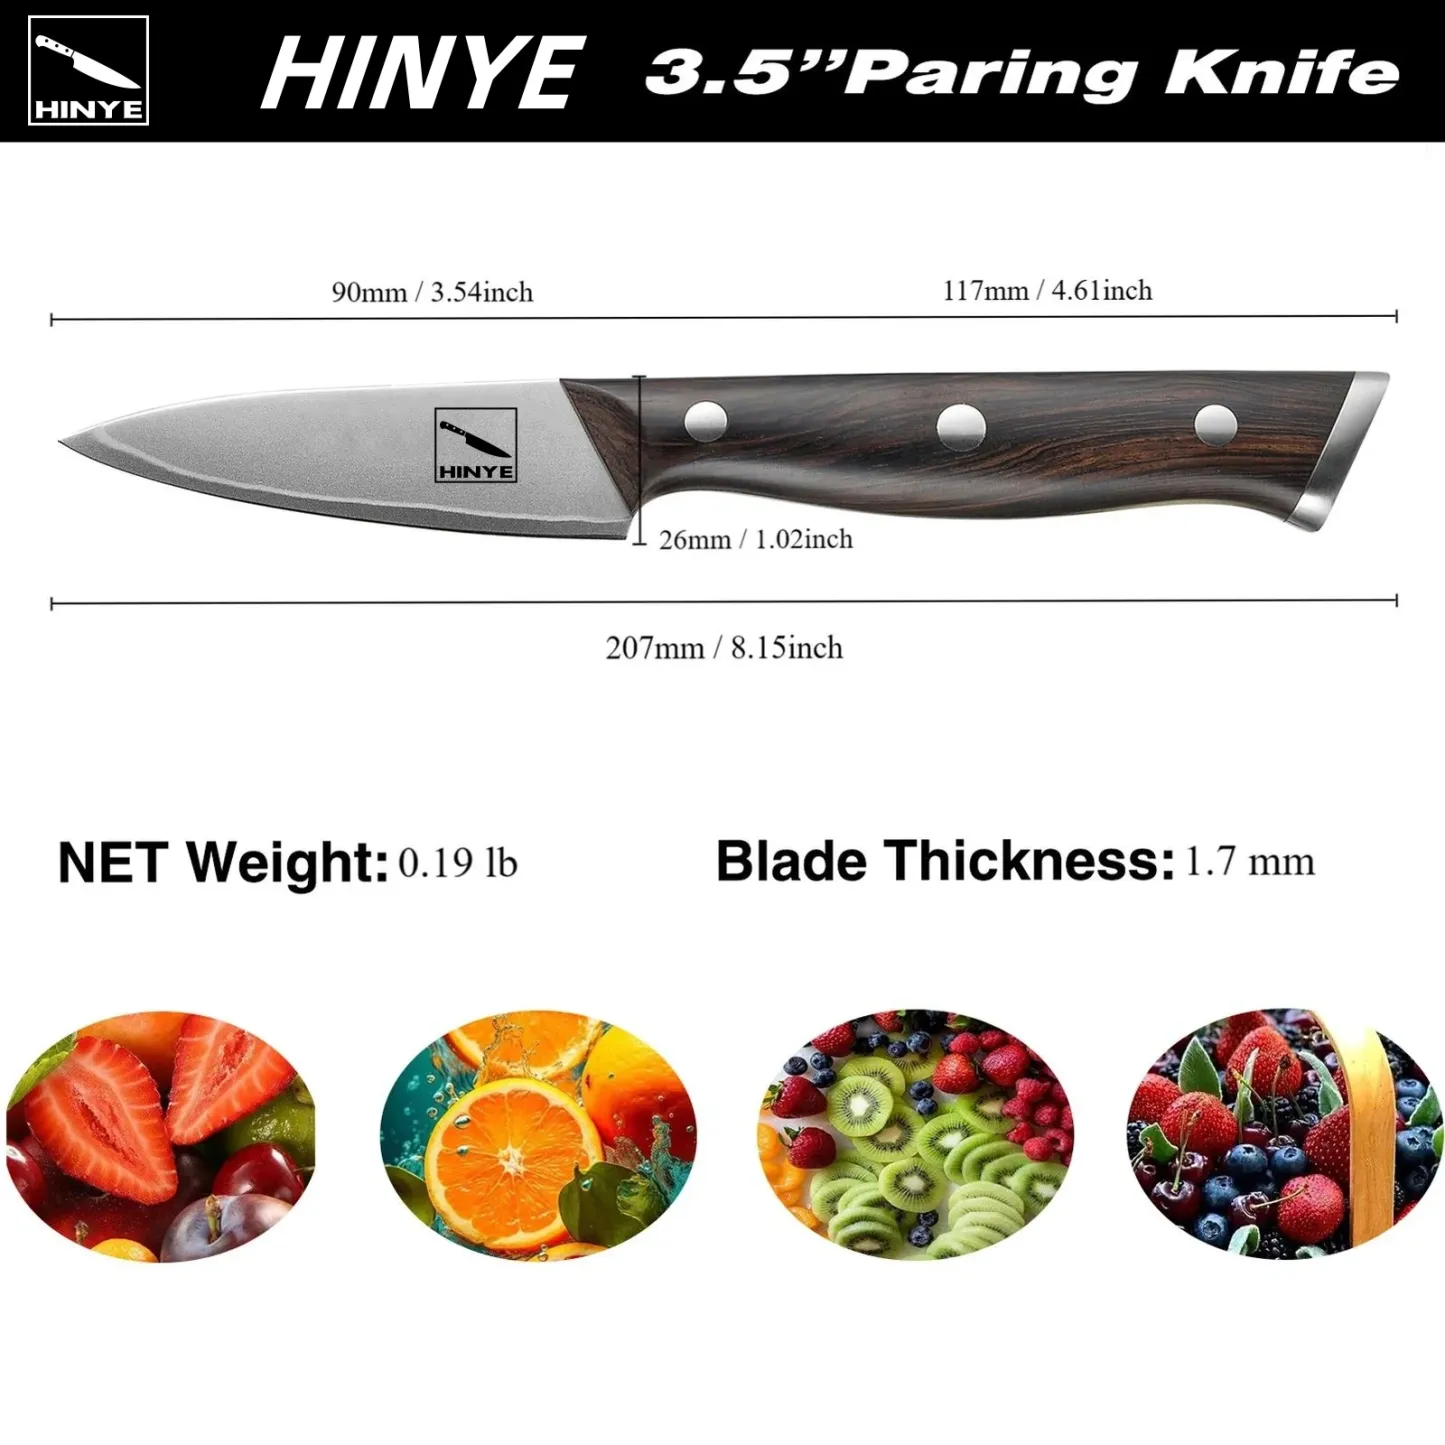 Hinye-Rondure 3.5" Paring